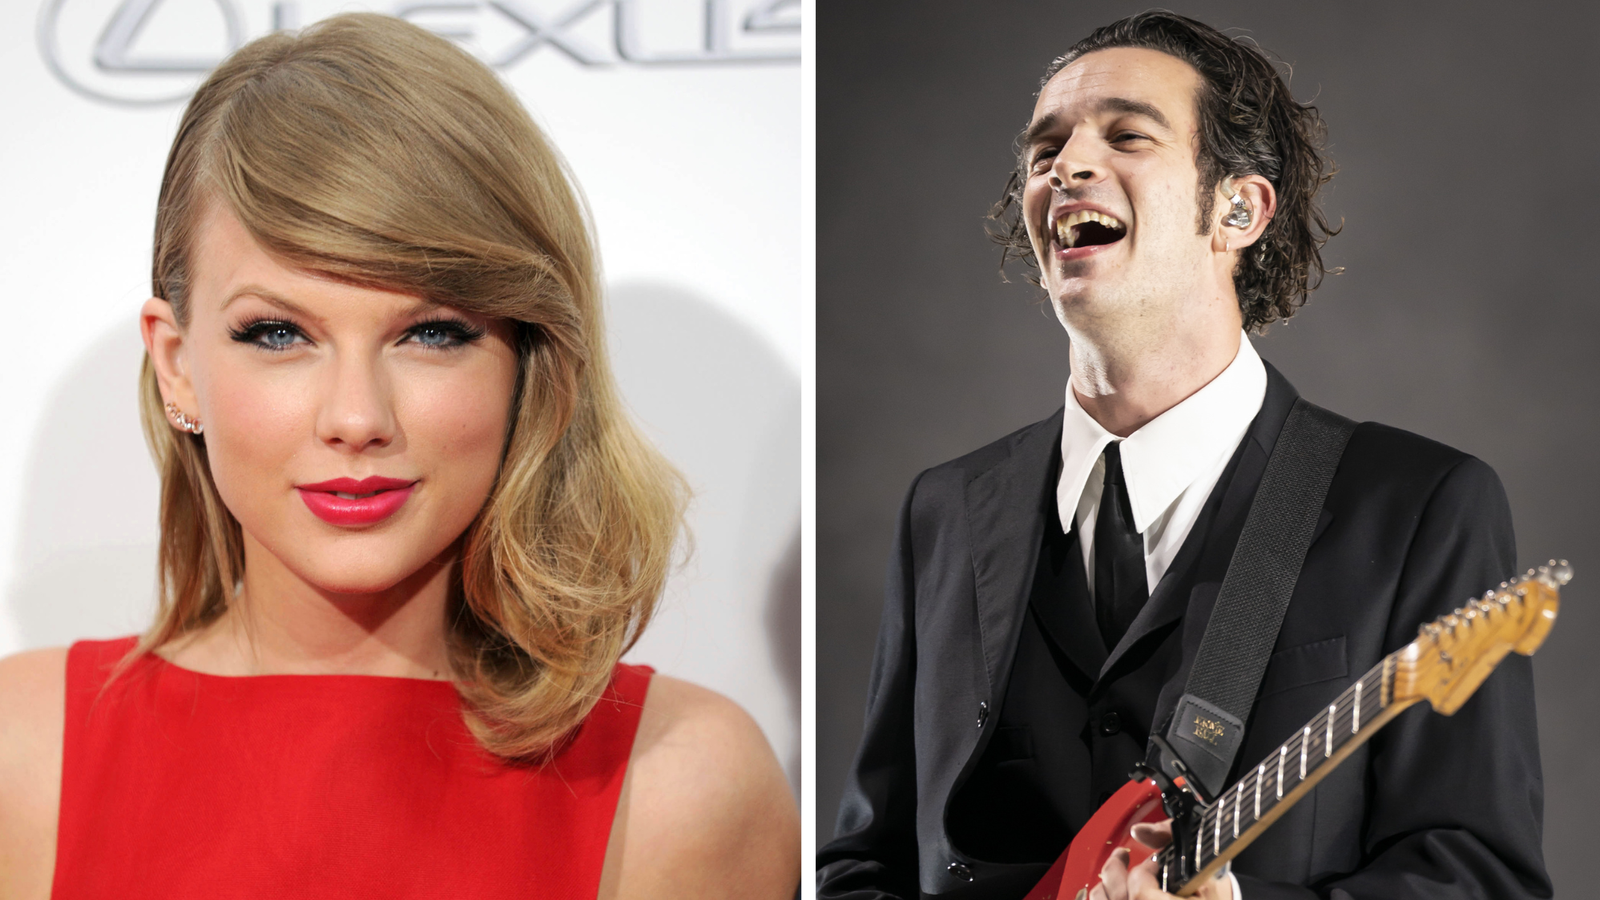 Taylor Swift and Matty Healy 'no longer romantically involved', reports say